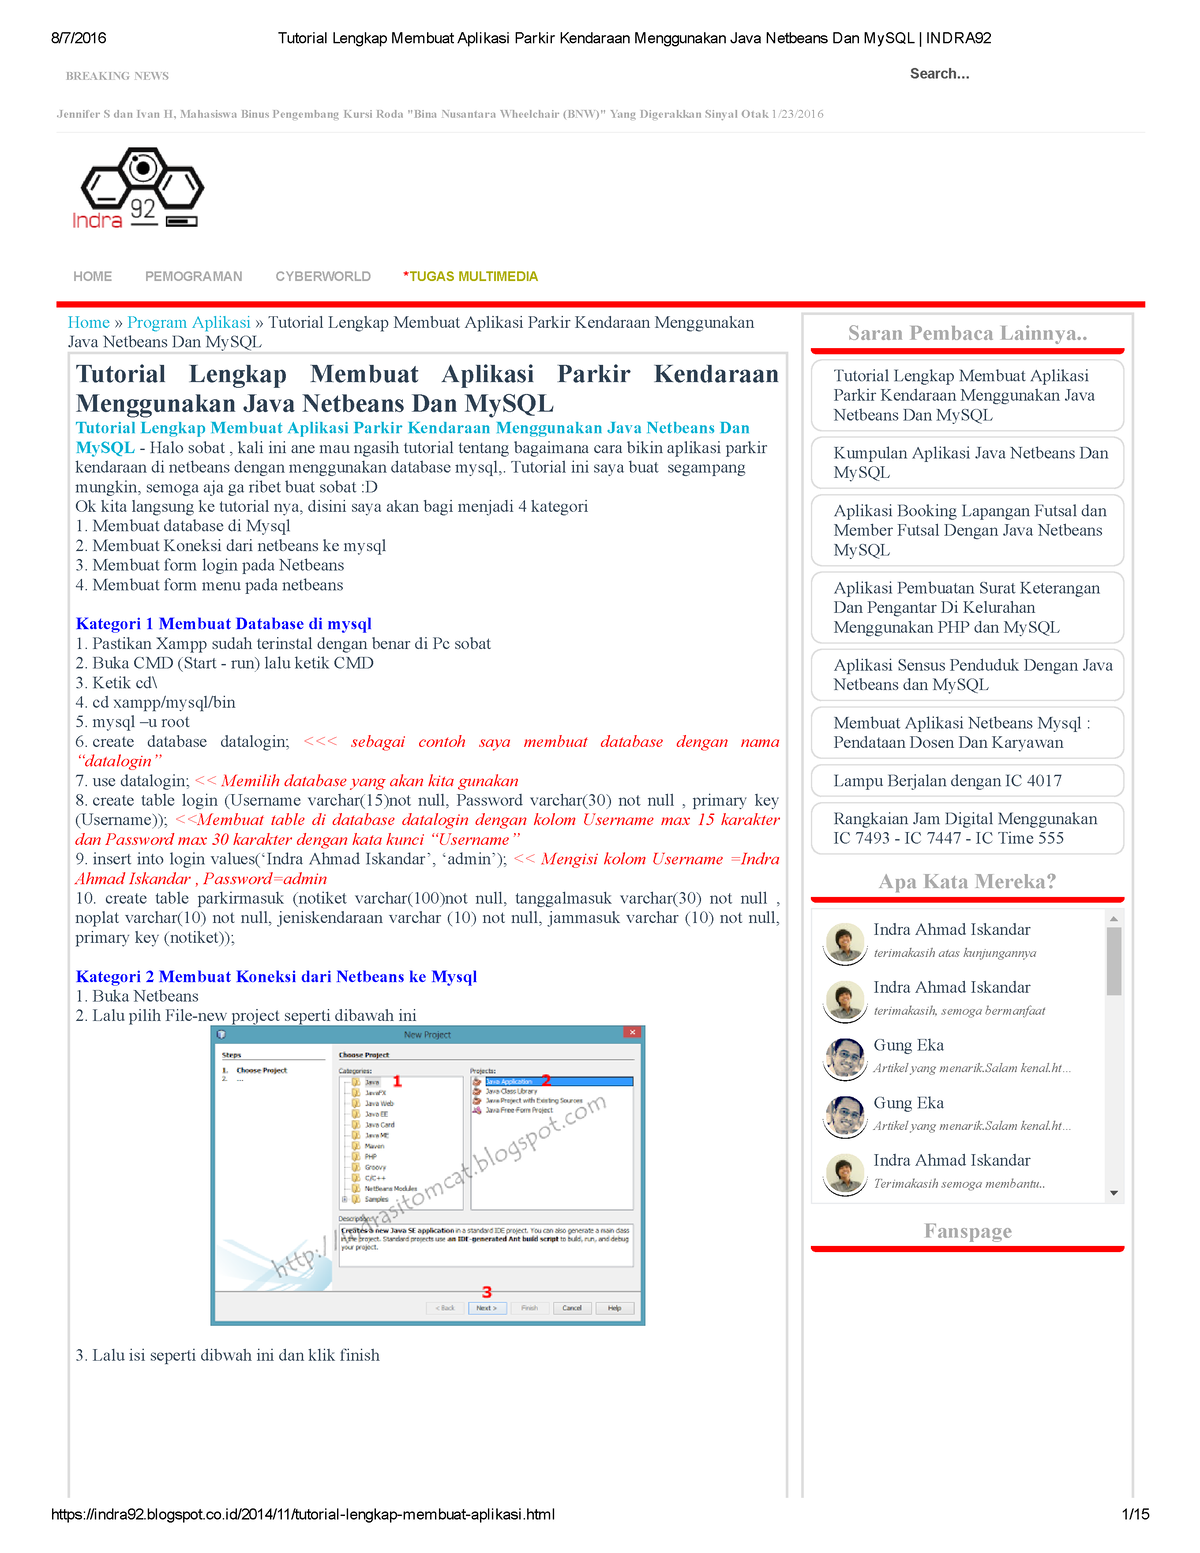 Tutorial Lengkap Membuat Aplikasi Parkir Kendaraan Menggunakan Java Netbeans Dan My Sql Indra 92 5434